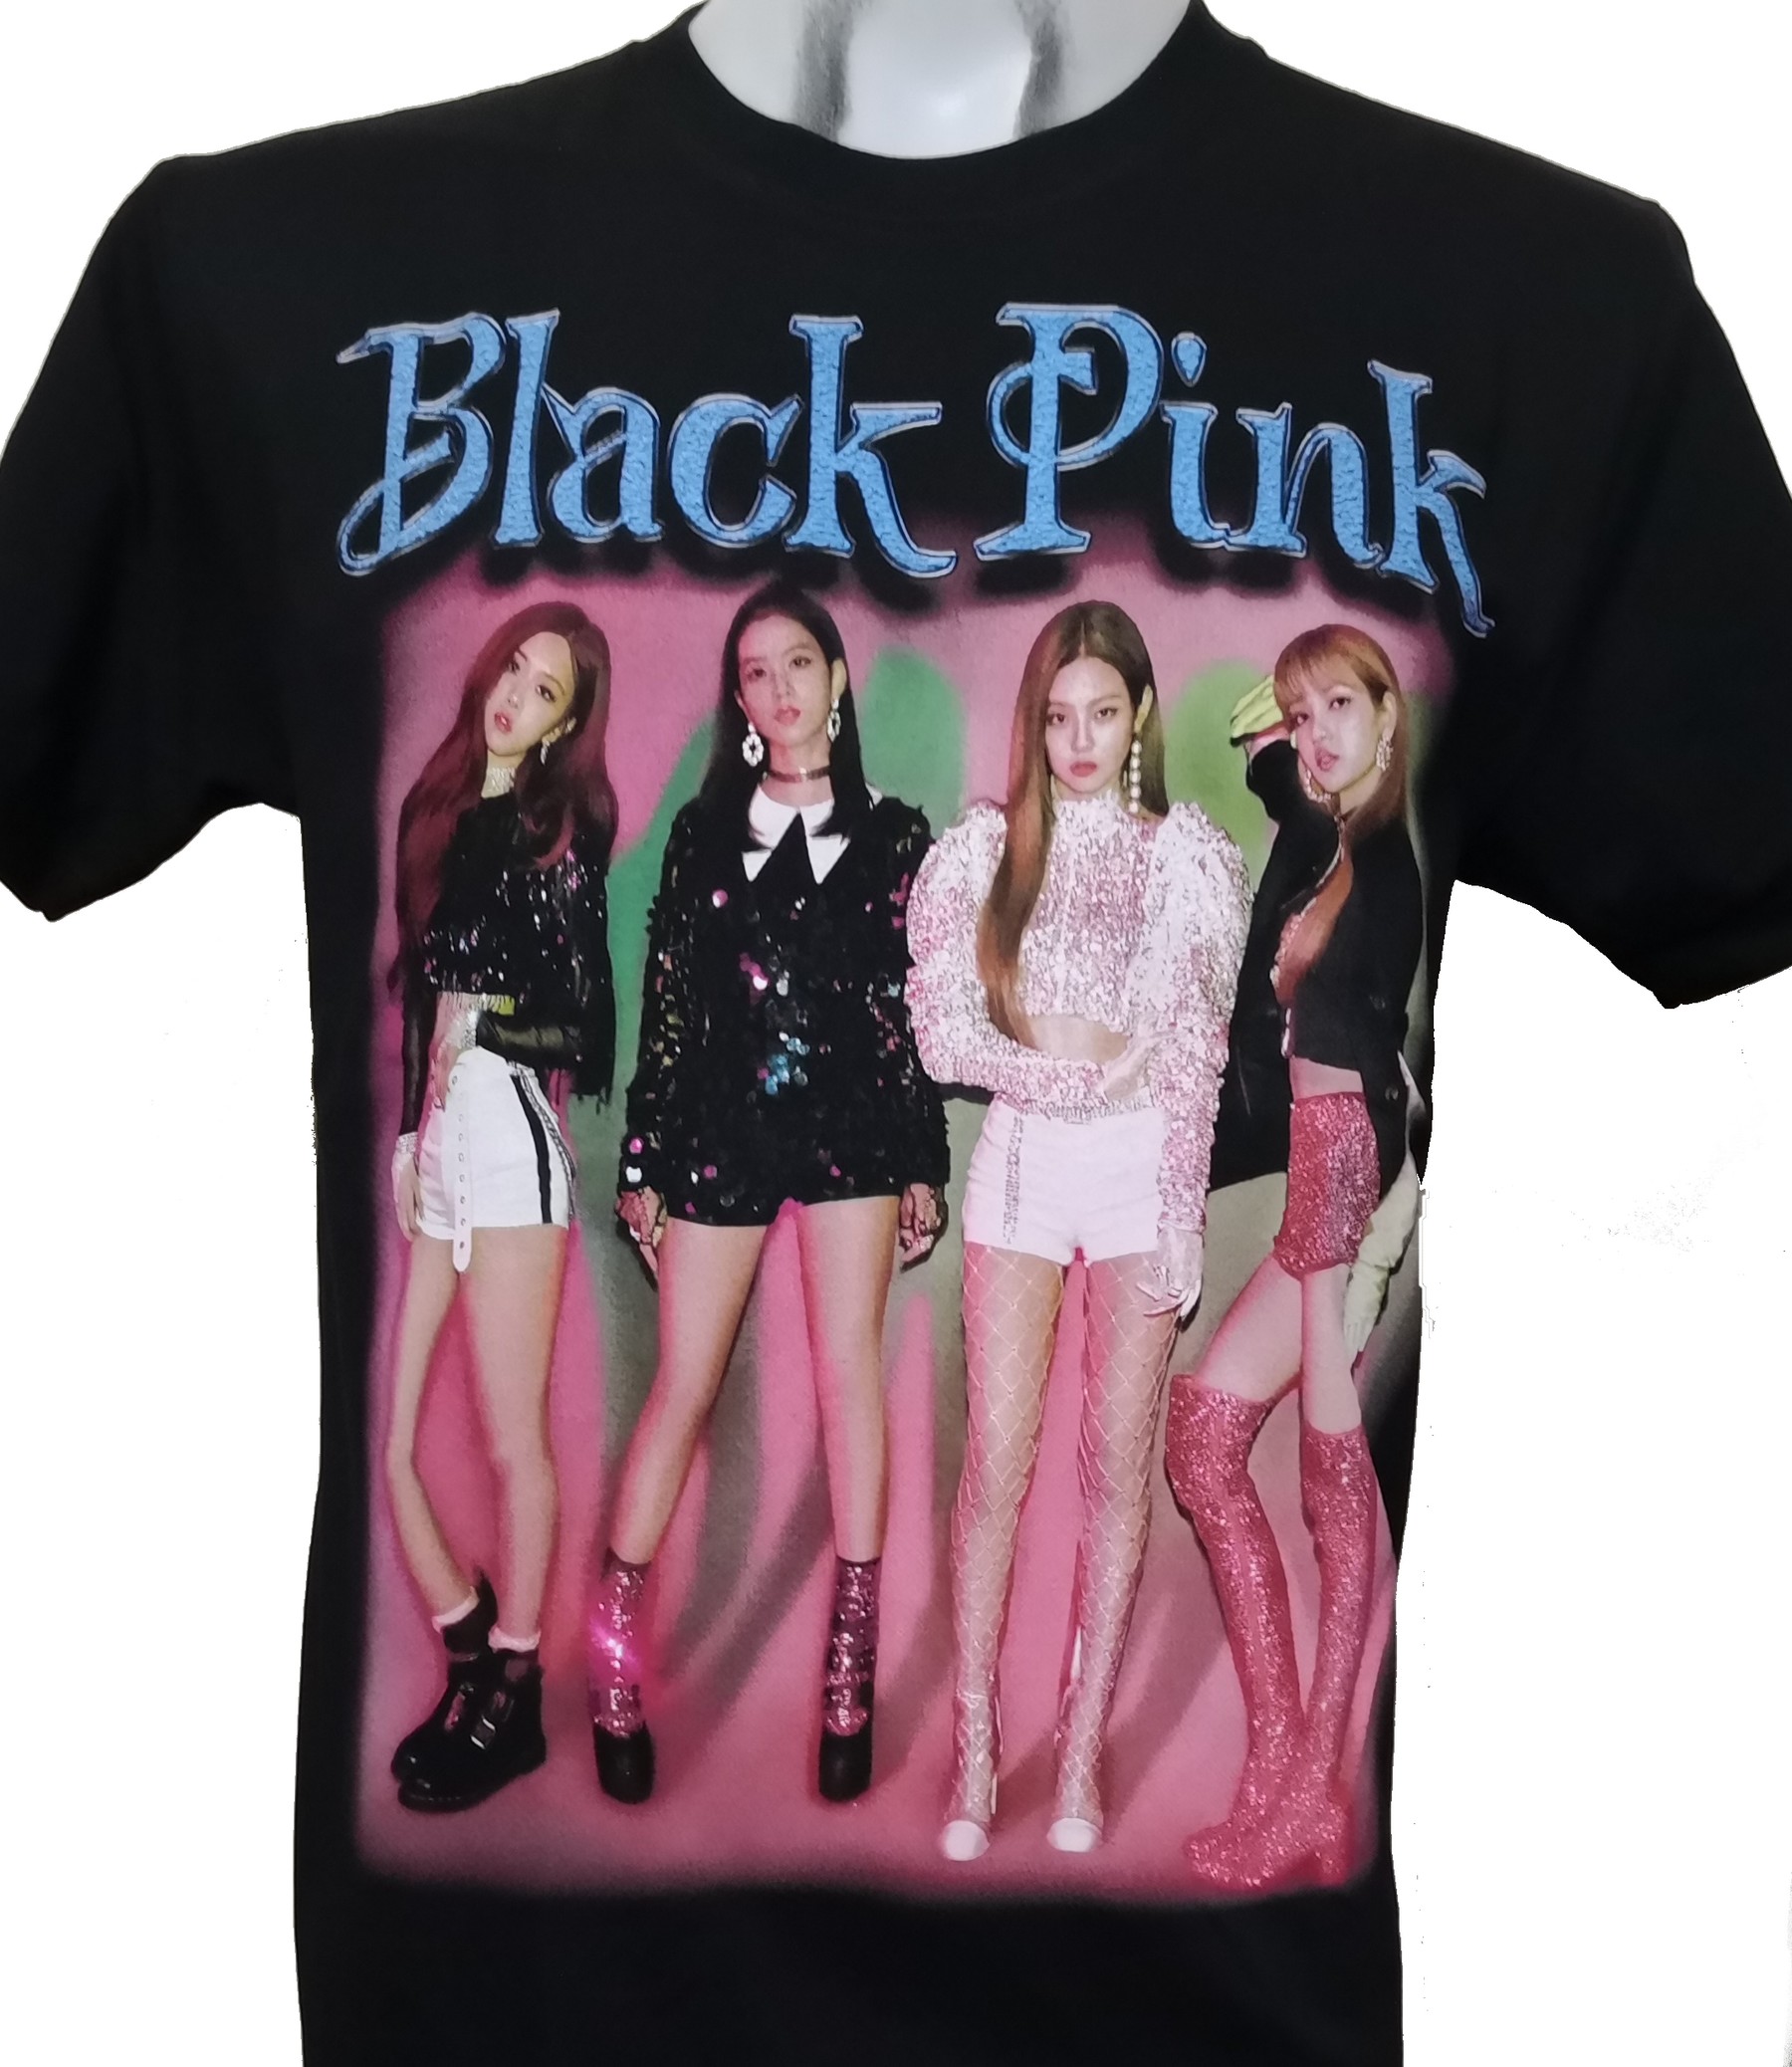 Blackpink t-shirt size XXL